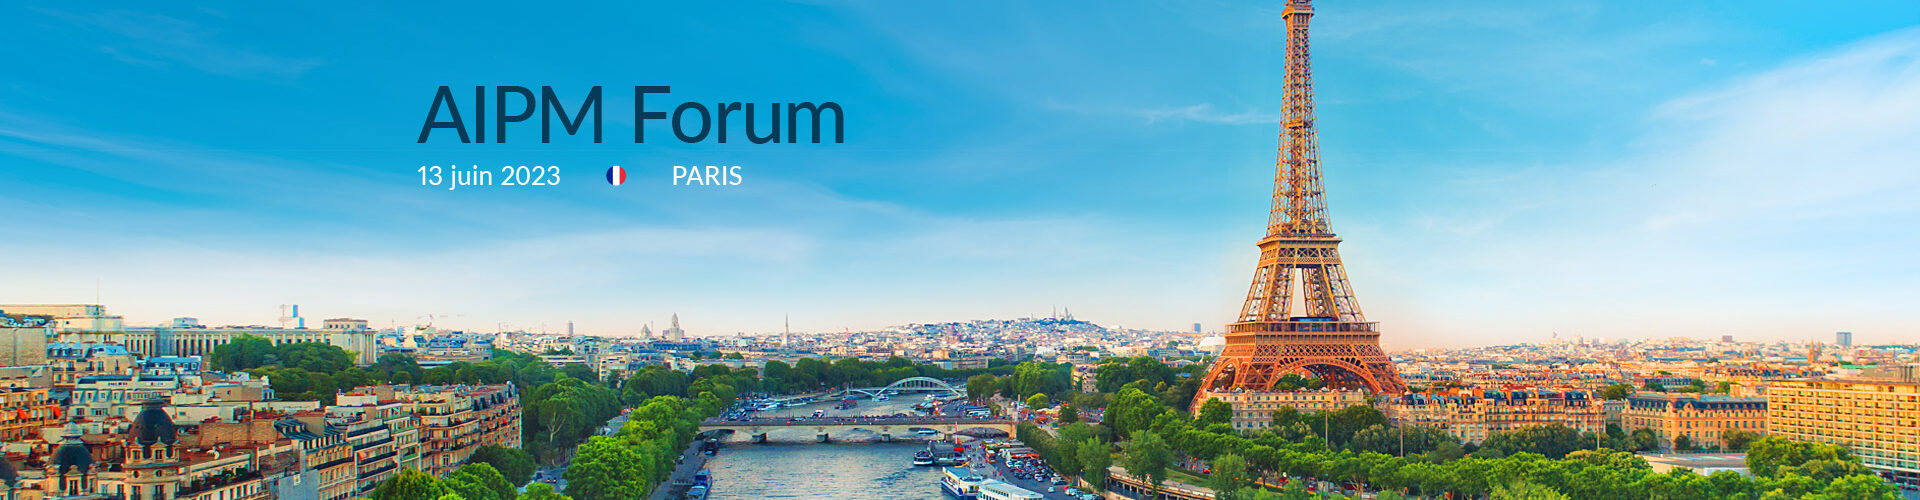 Blog Hero Paris AIPM Forum - Copperleaf Decision Analytics